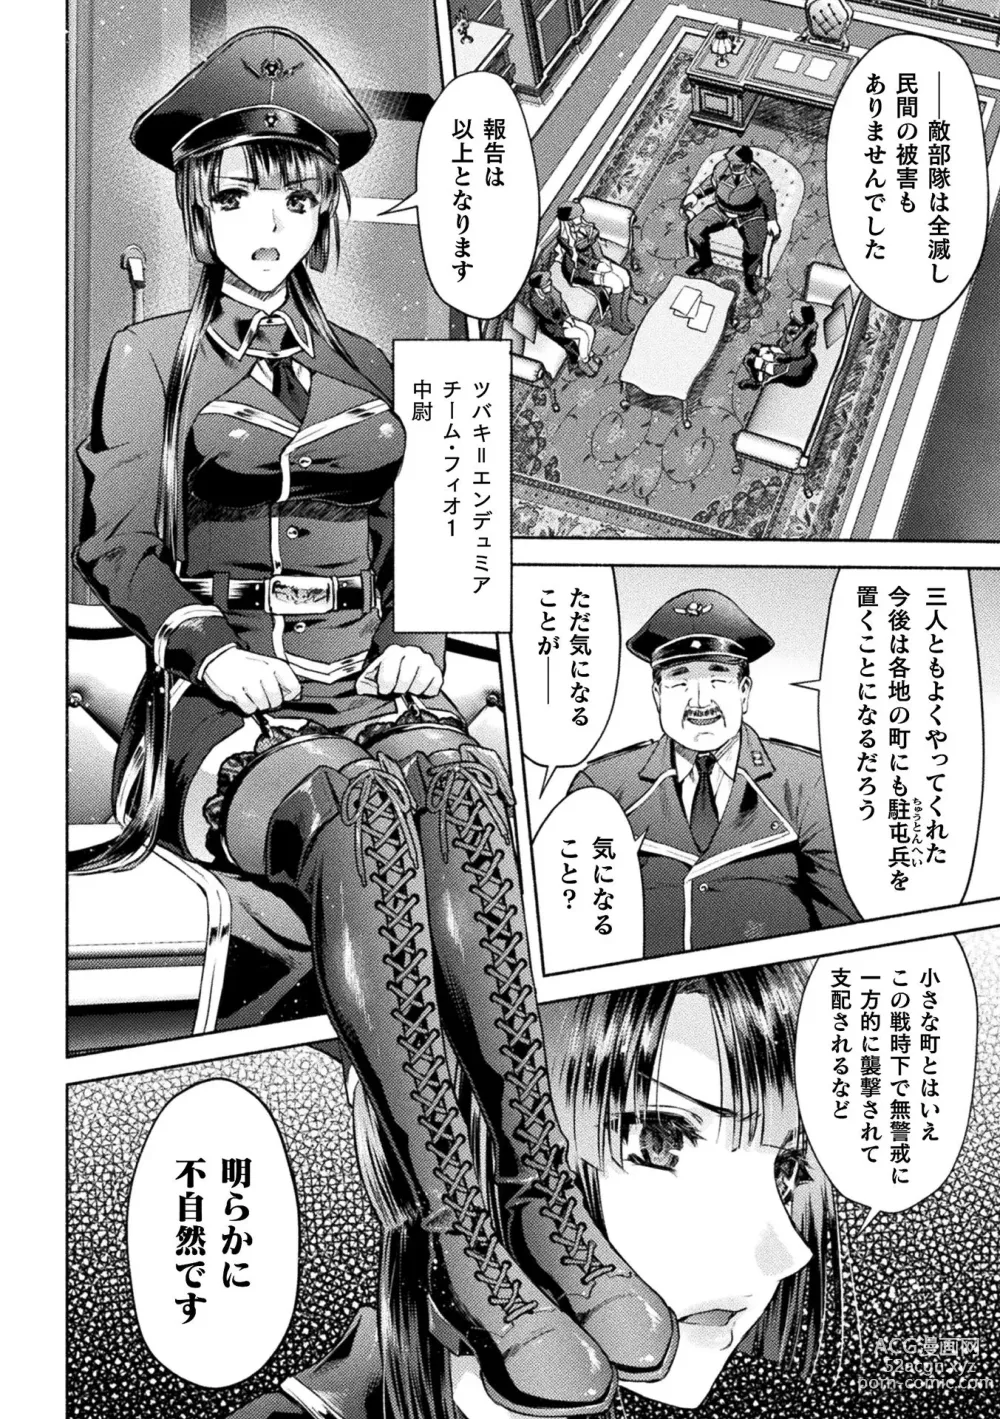 Page 10 of manga Kukkoro Heroines Vol. 34